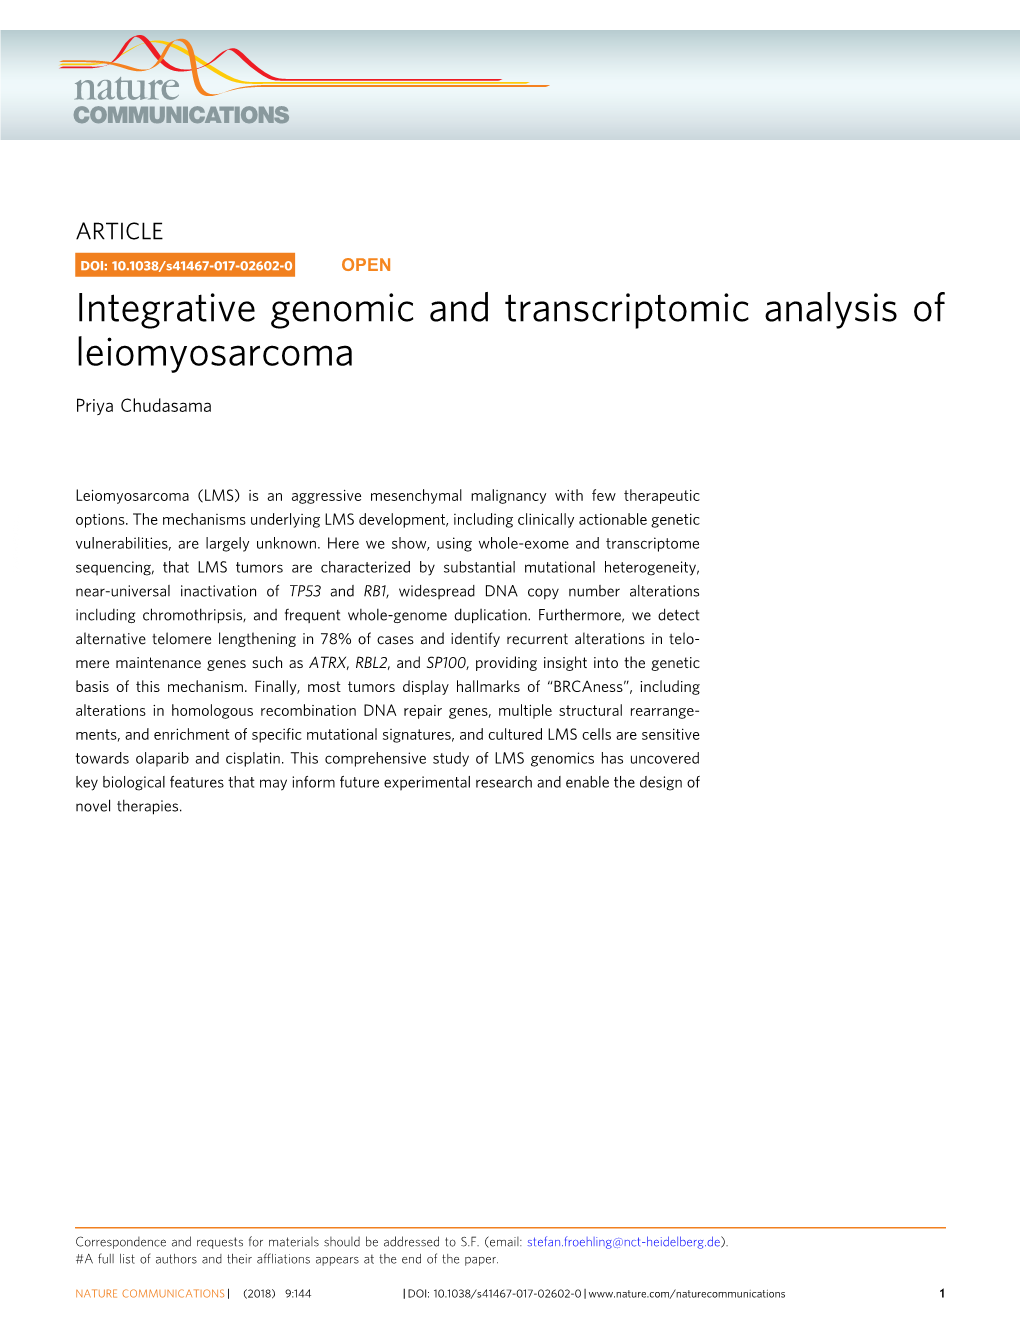 Integrative Genomic and Transcriptomic Analysis of Leiomyosarcoma